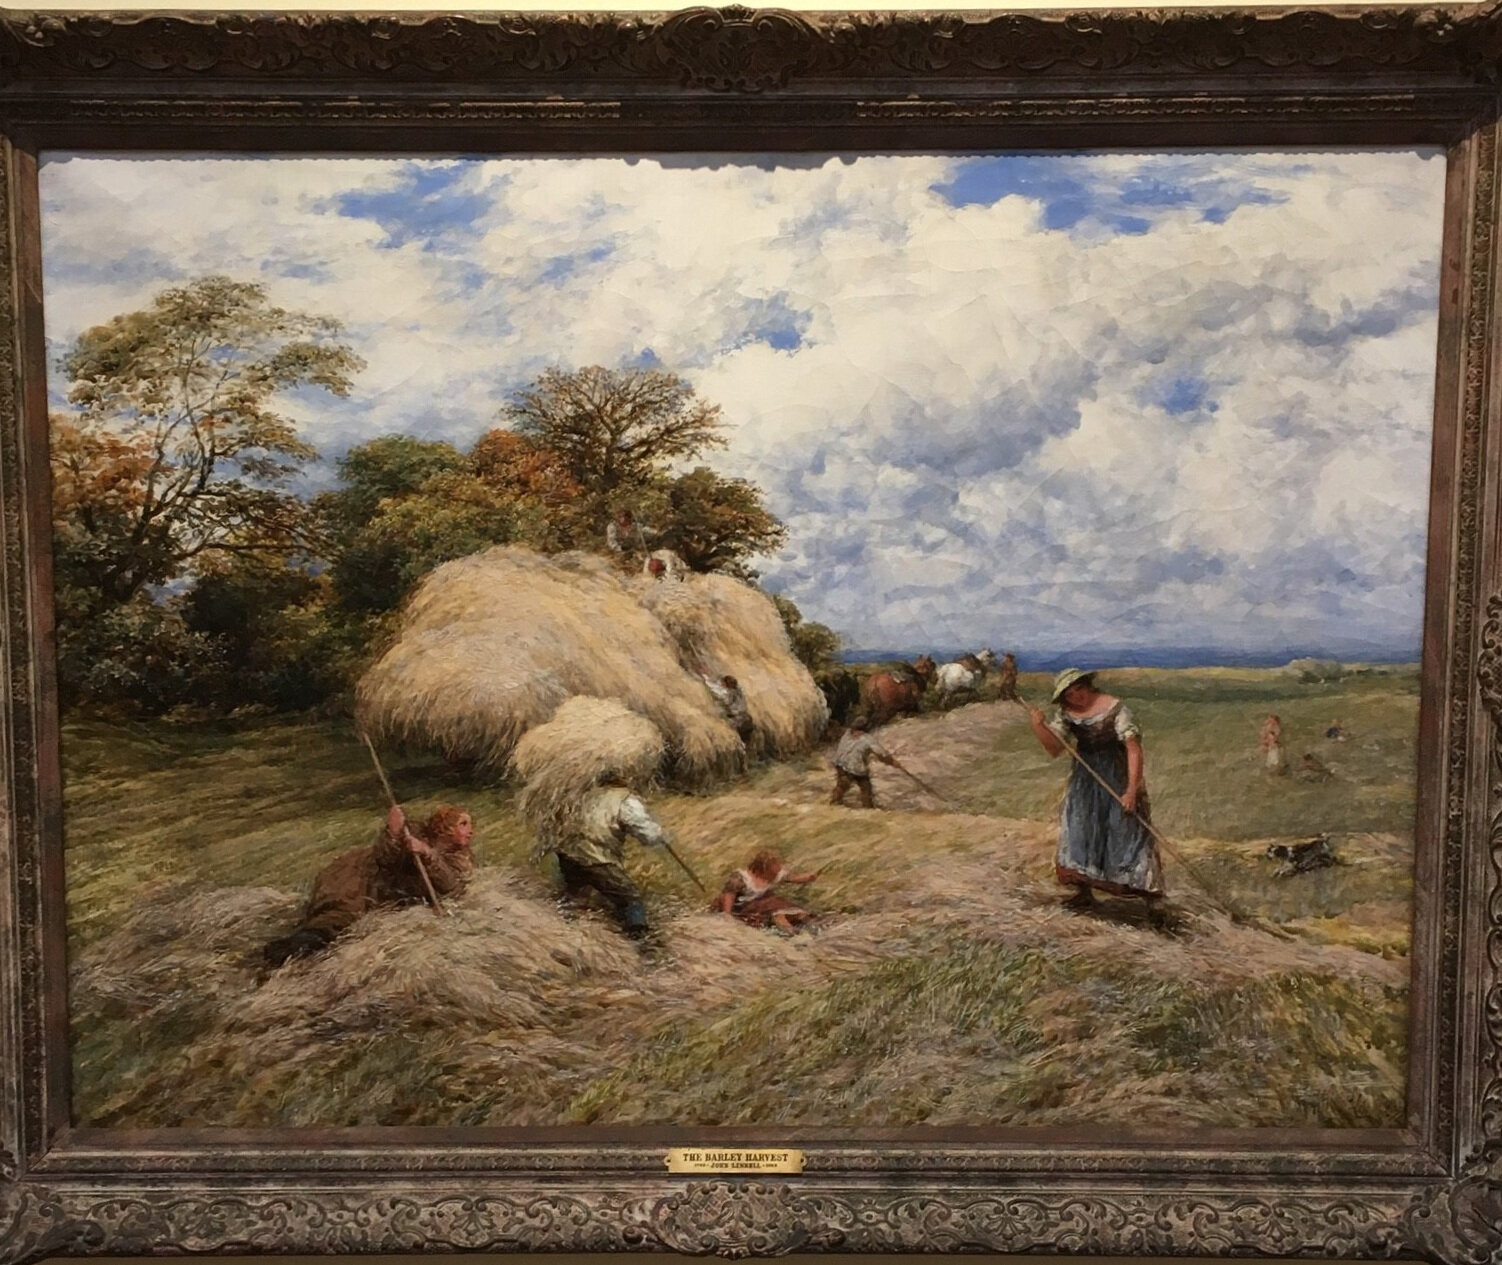 "The Barley Harvest" by John Linnell